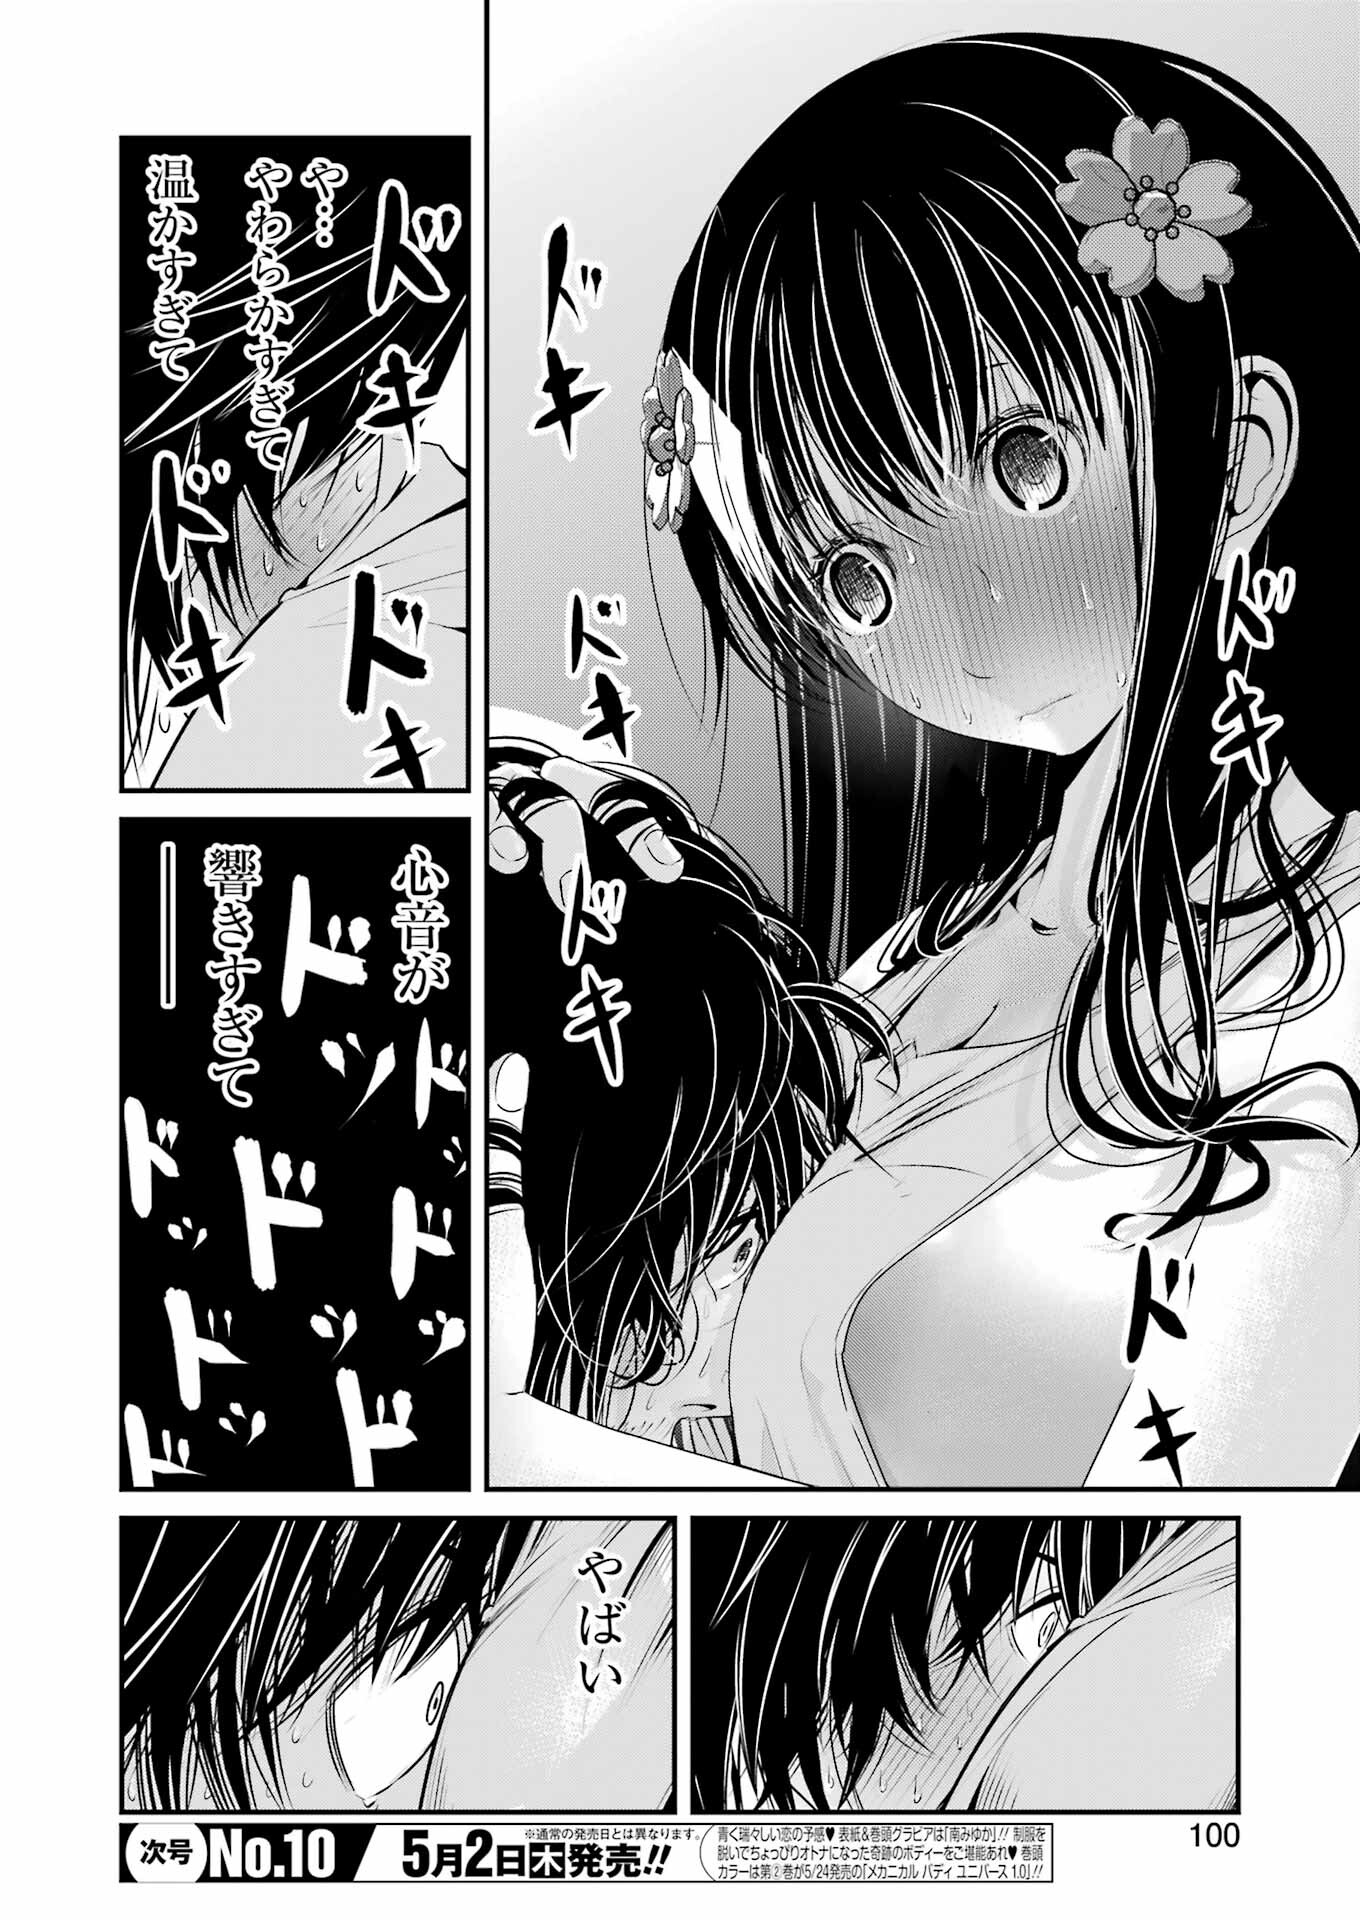 Suika wa Shoushika Tantou - Chapter 8 - Page 2